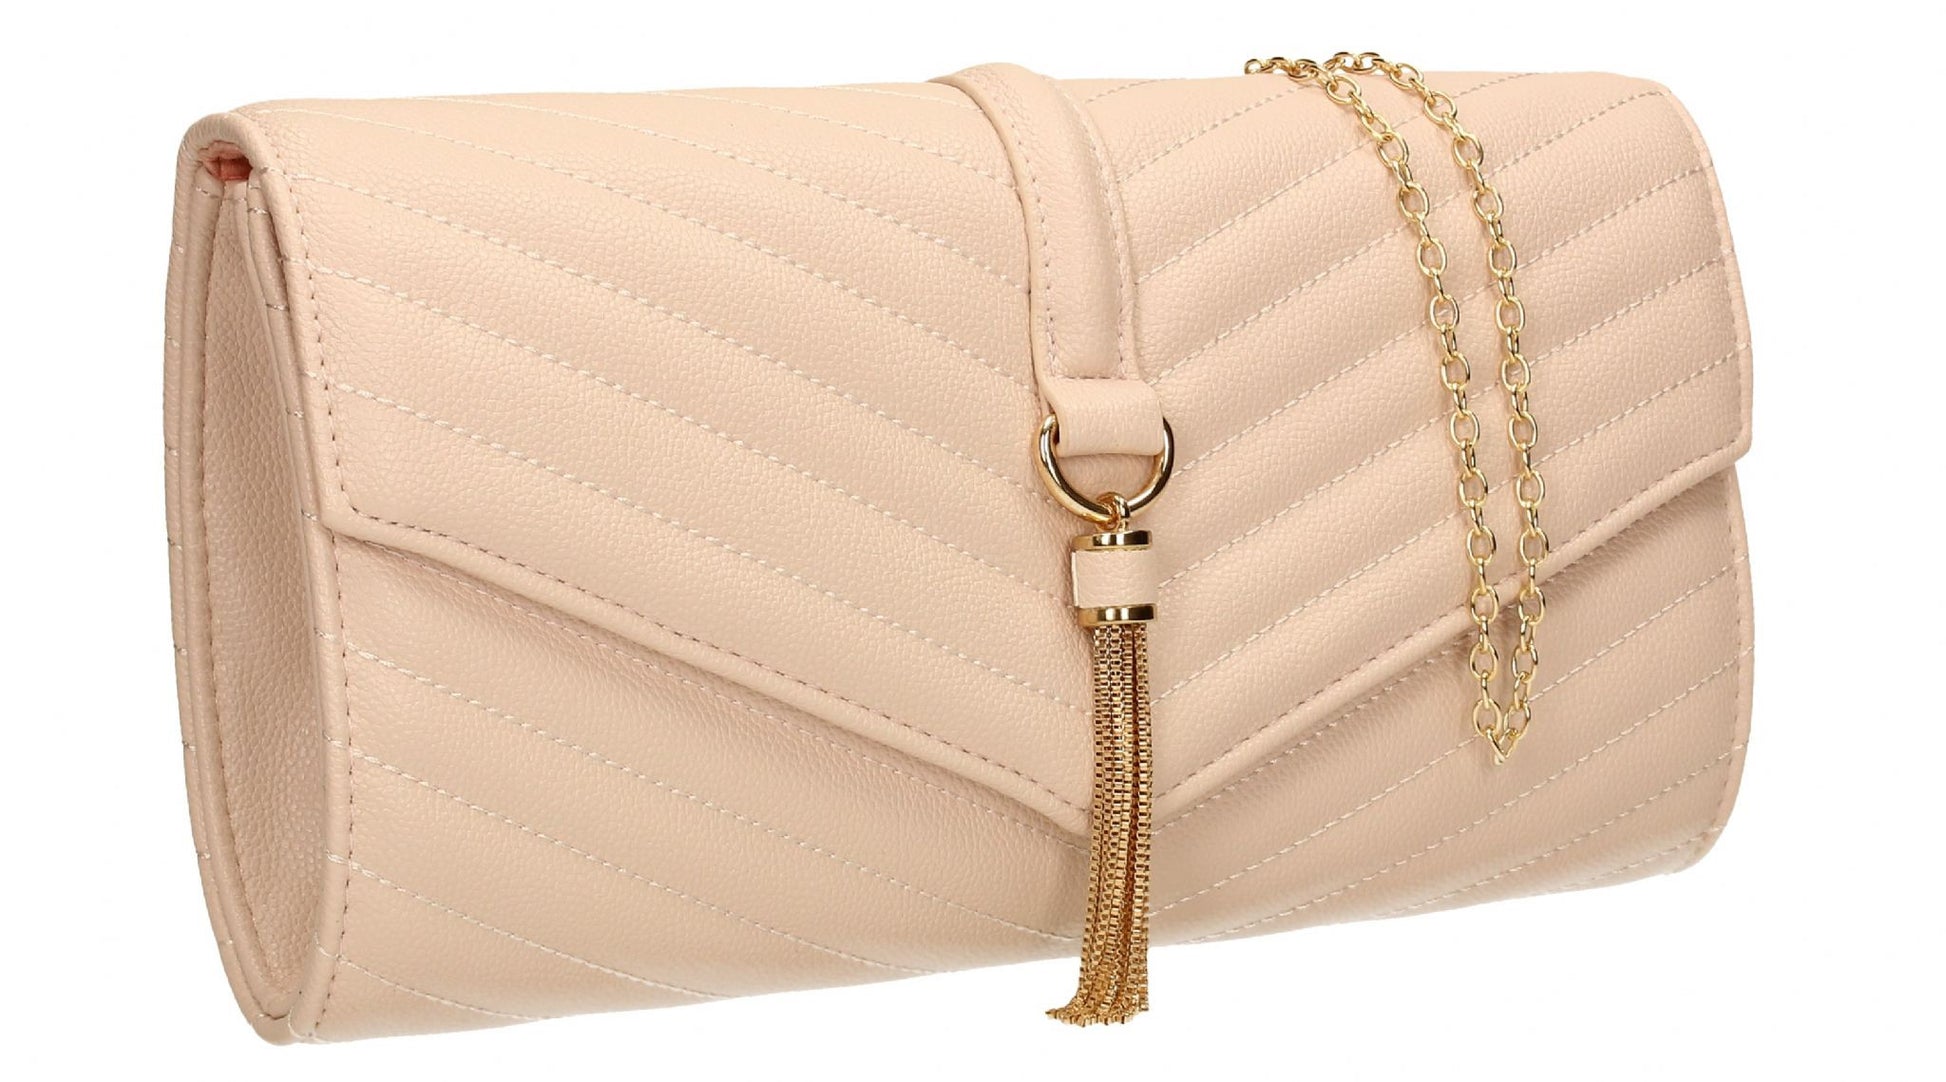 SWANKYSWANS Temperley Clutch Bag Pink Beige Cute Cheap Clutch Bag For Weddings School and Work